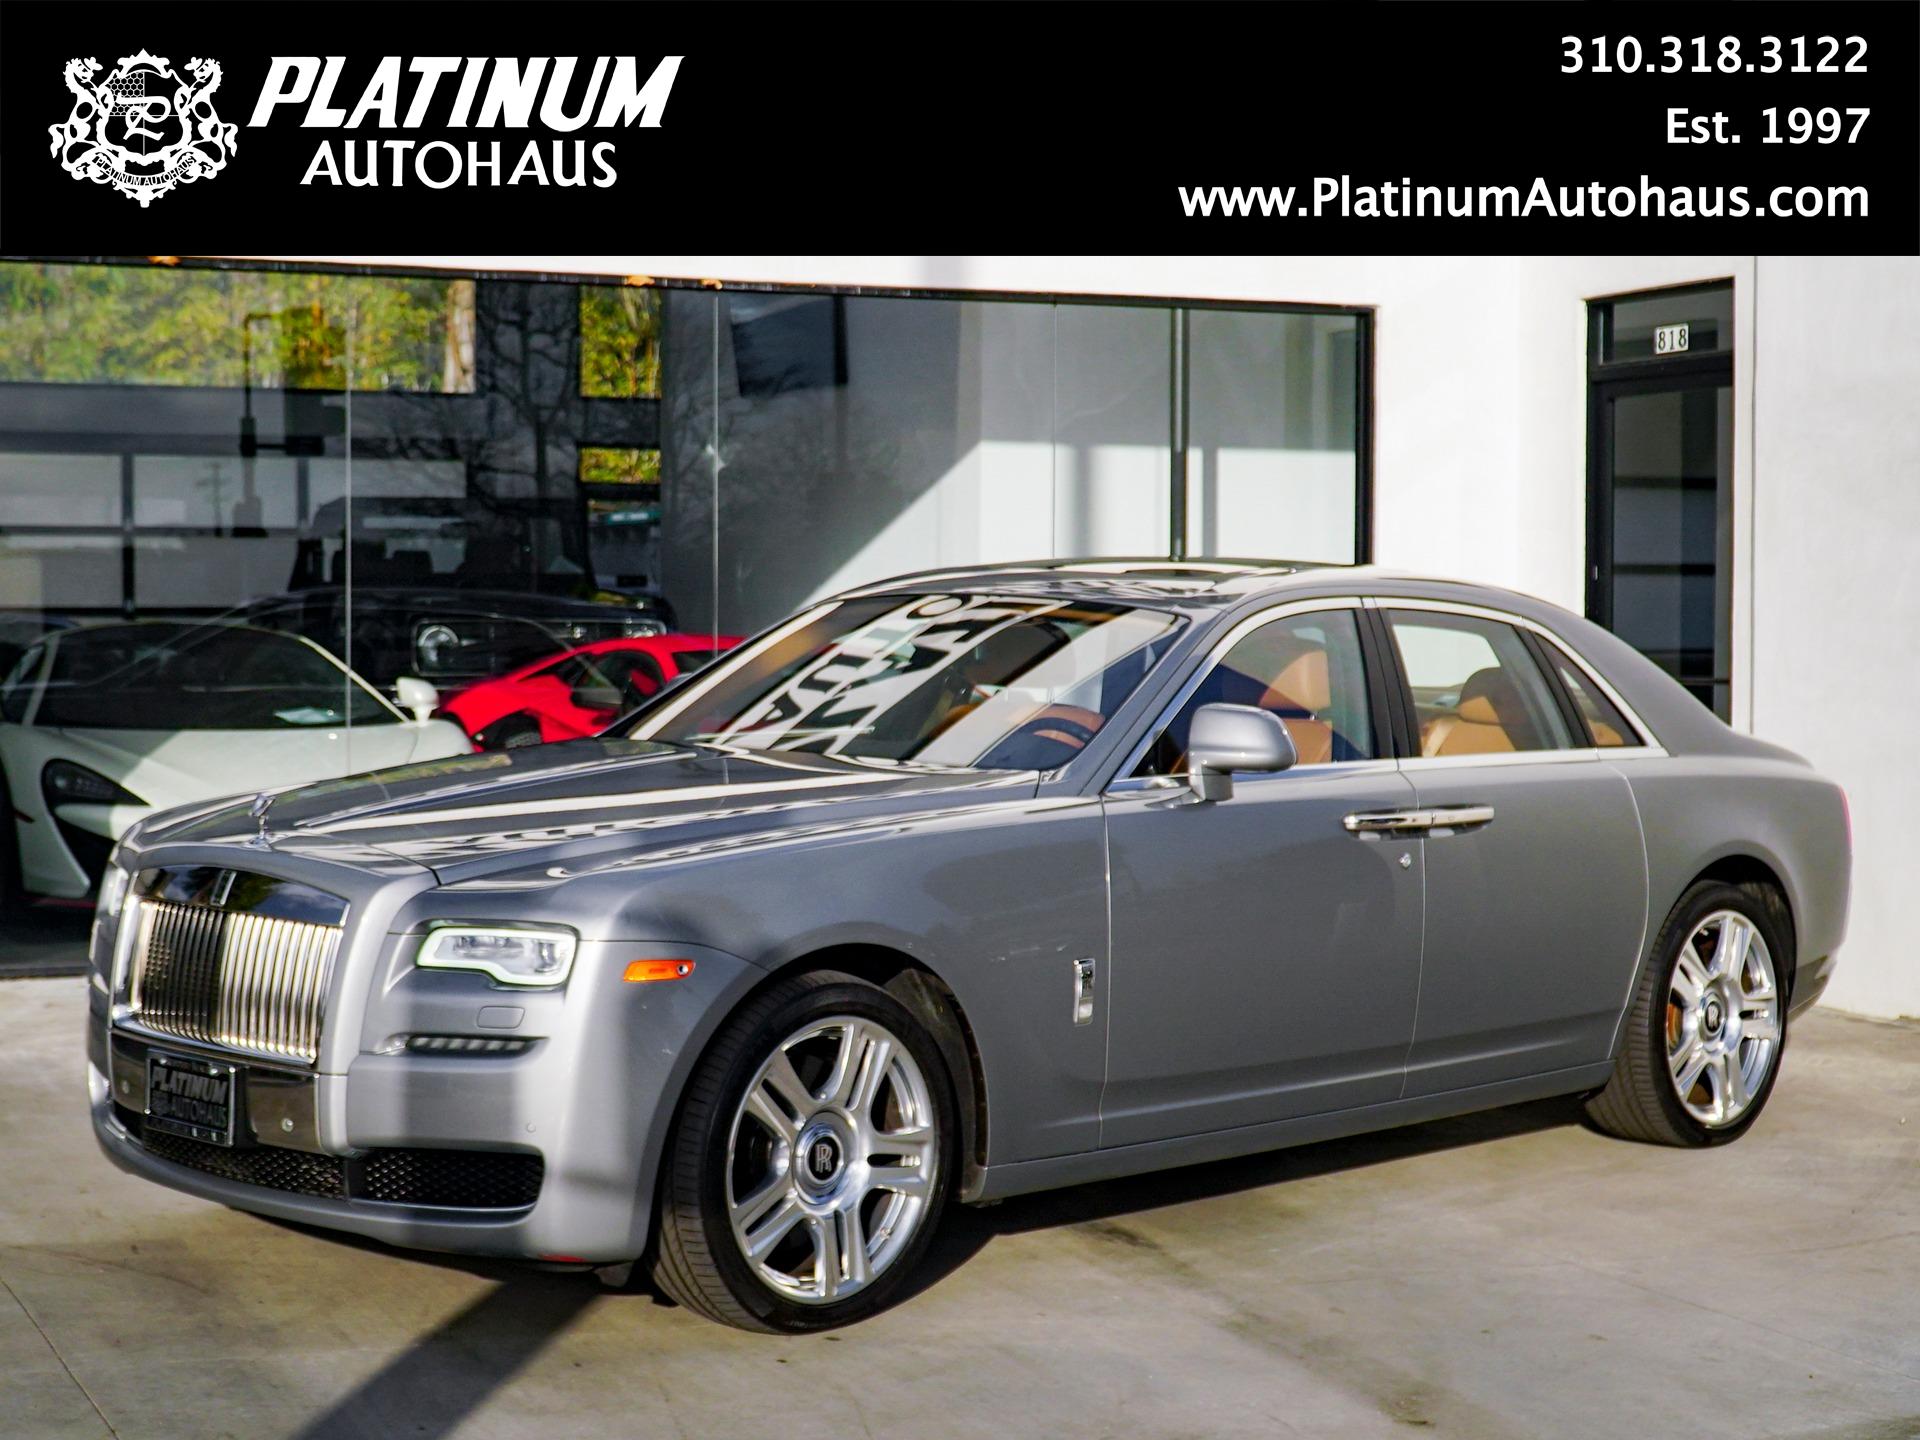 Rolls-Royce Phantom Series II Platino for Sale